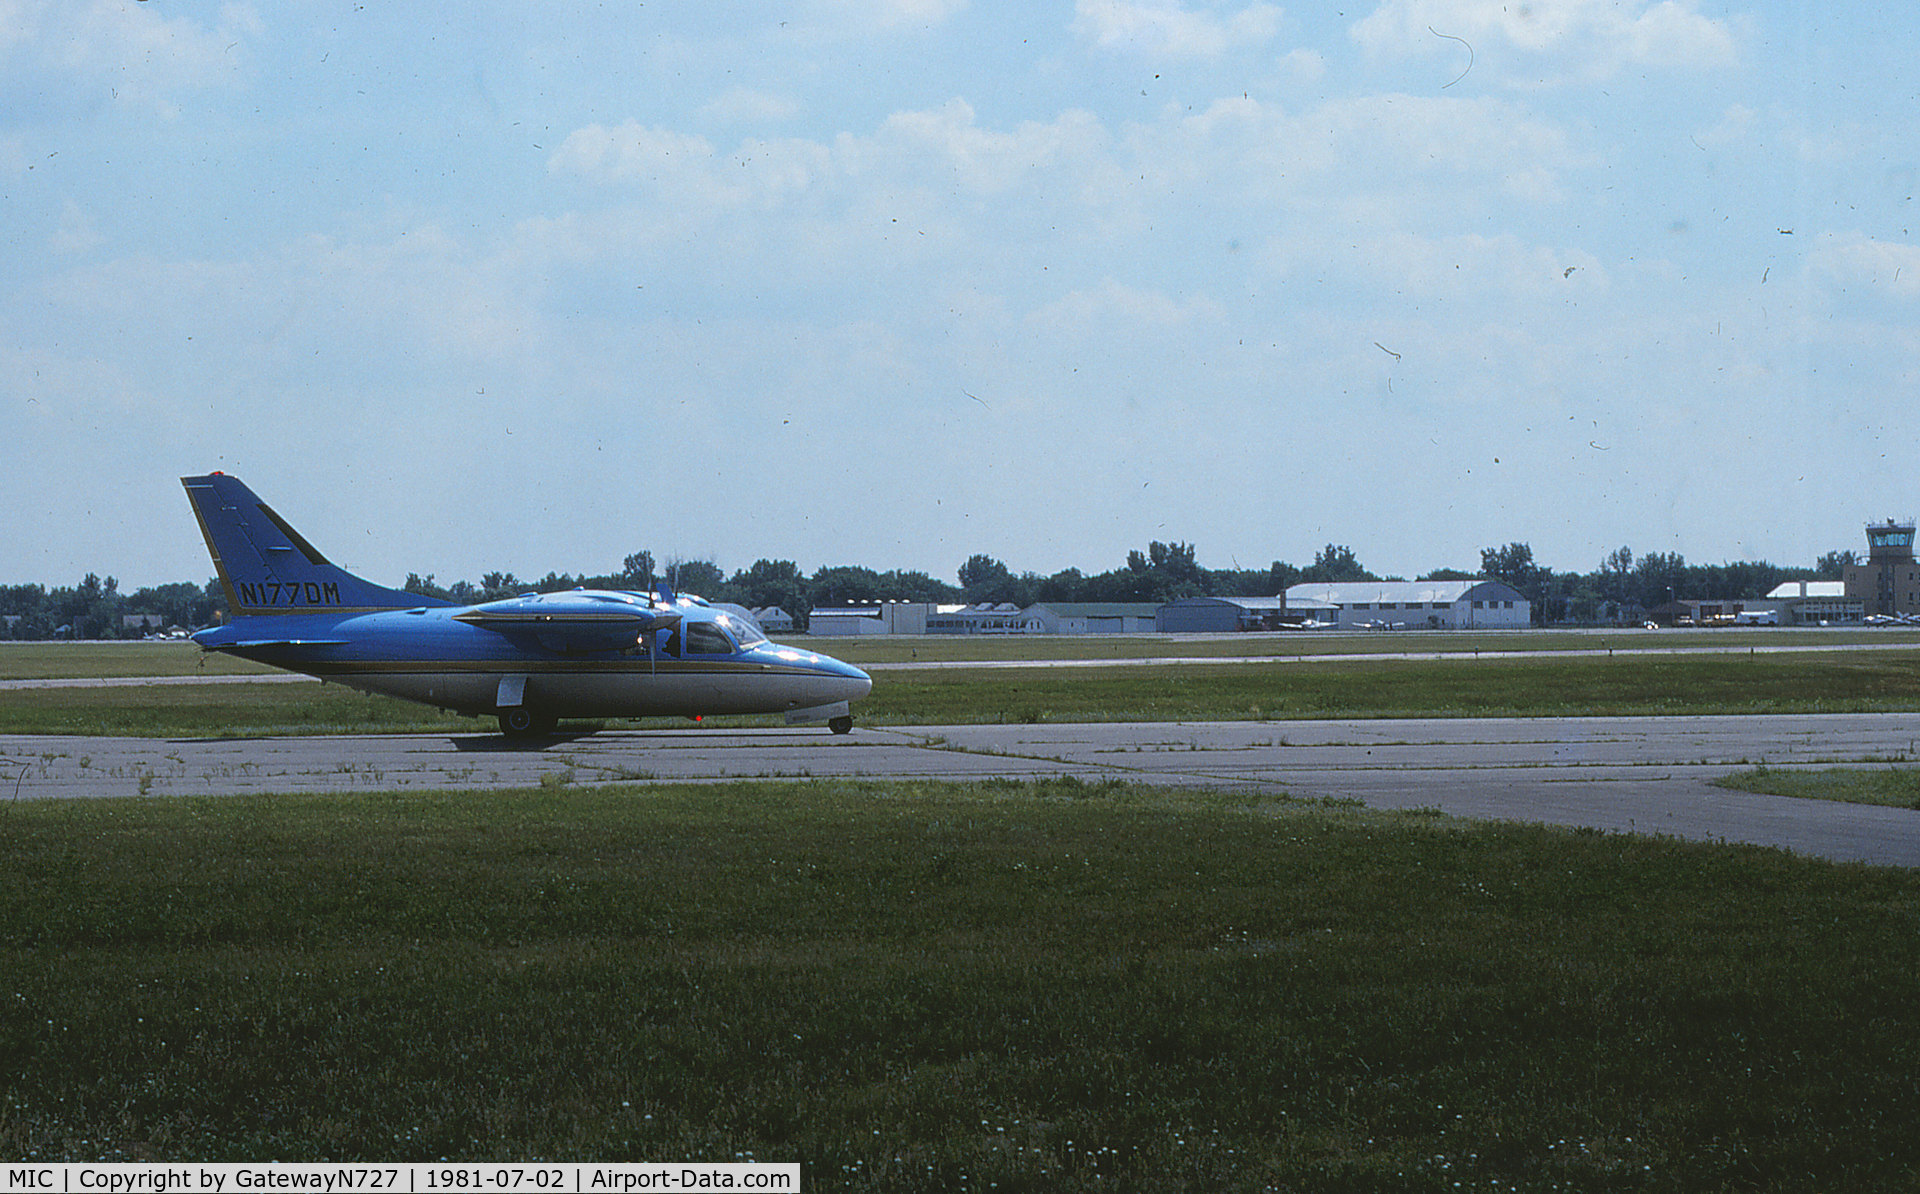 Crystal Airport (MIC) - A 1968 model MU-2.